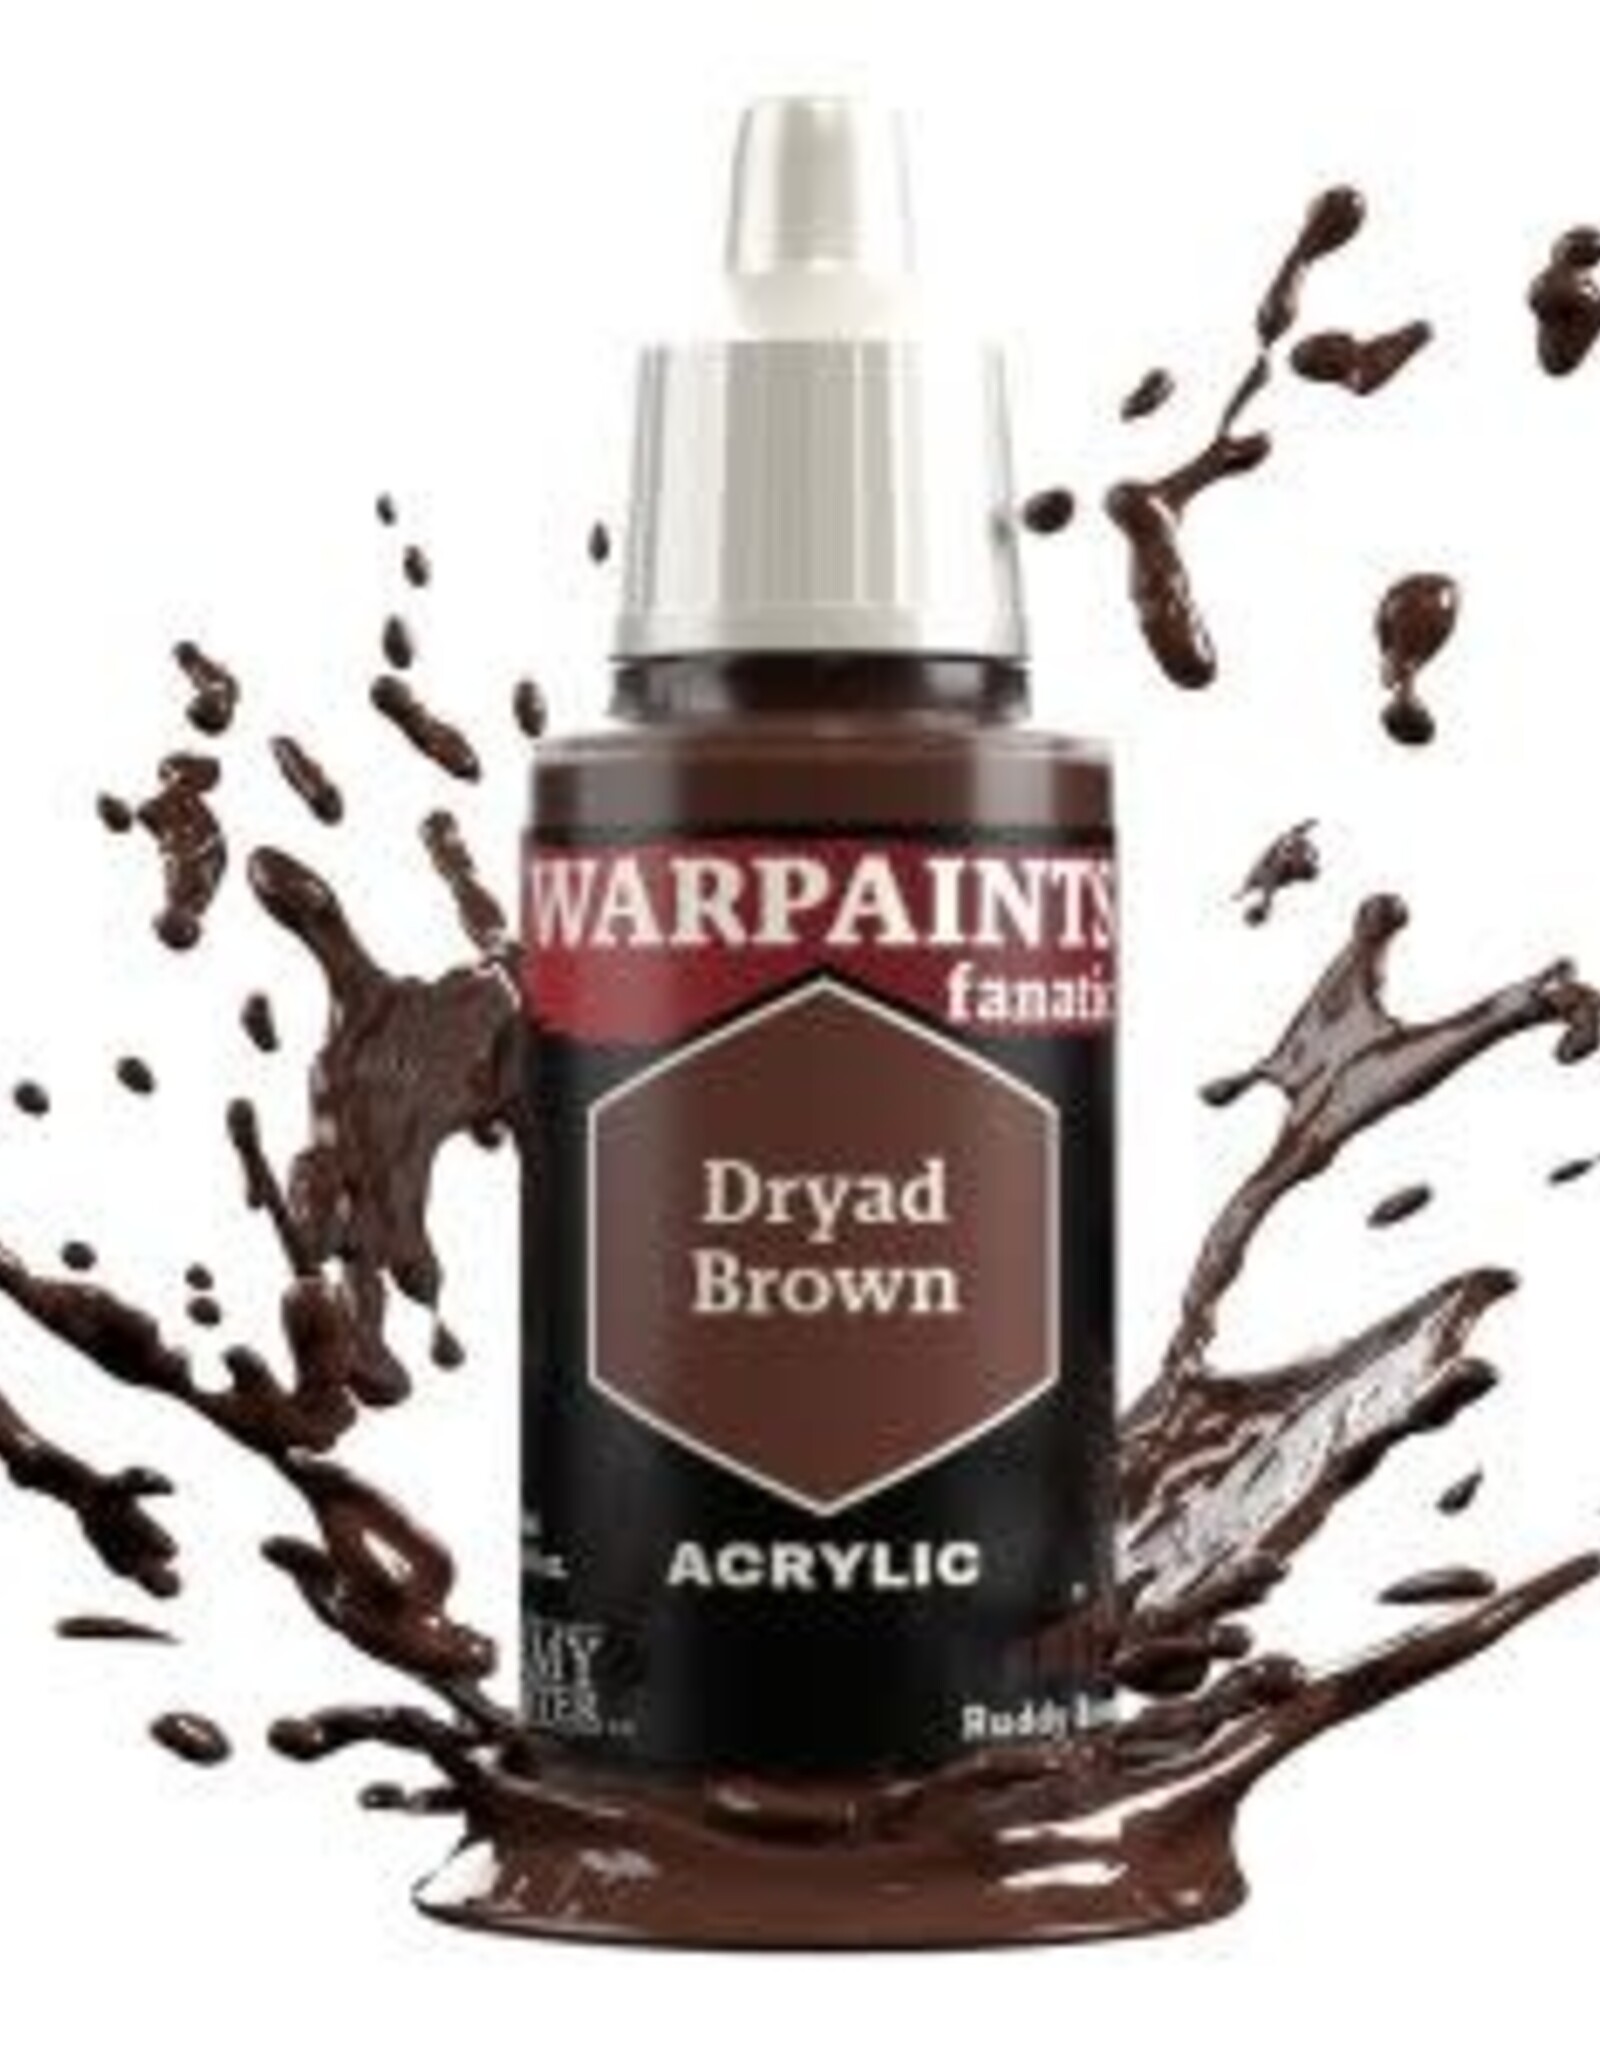 Warpaints Fanatic: Dryad Brown